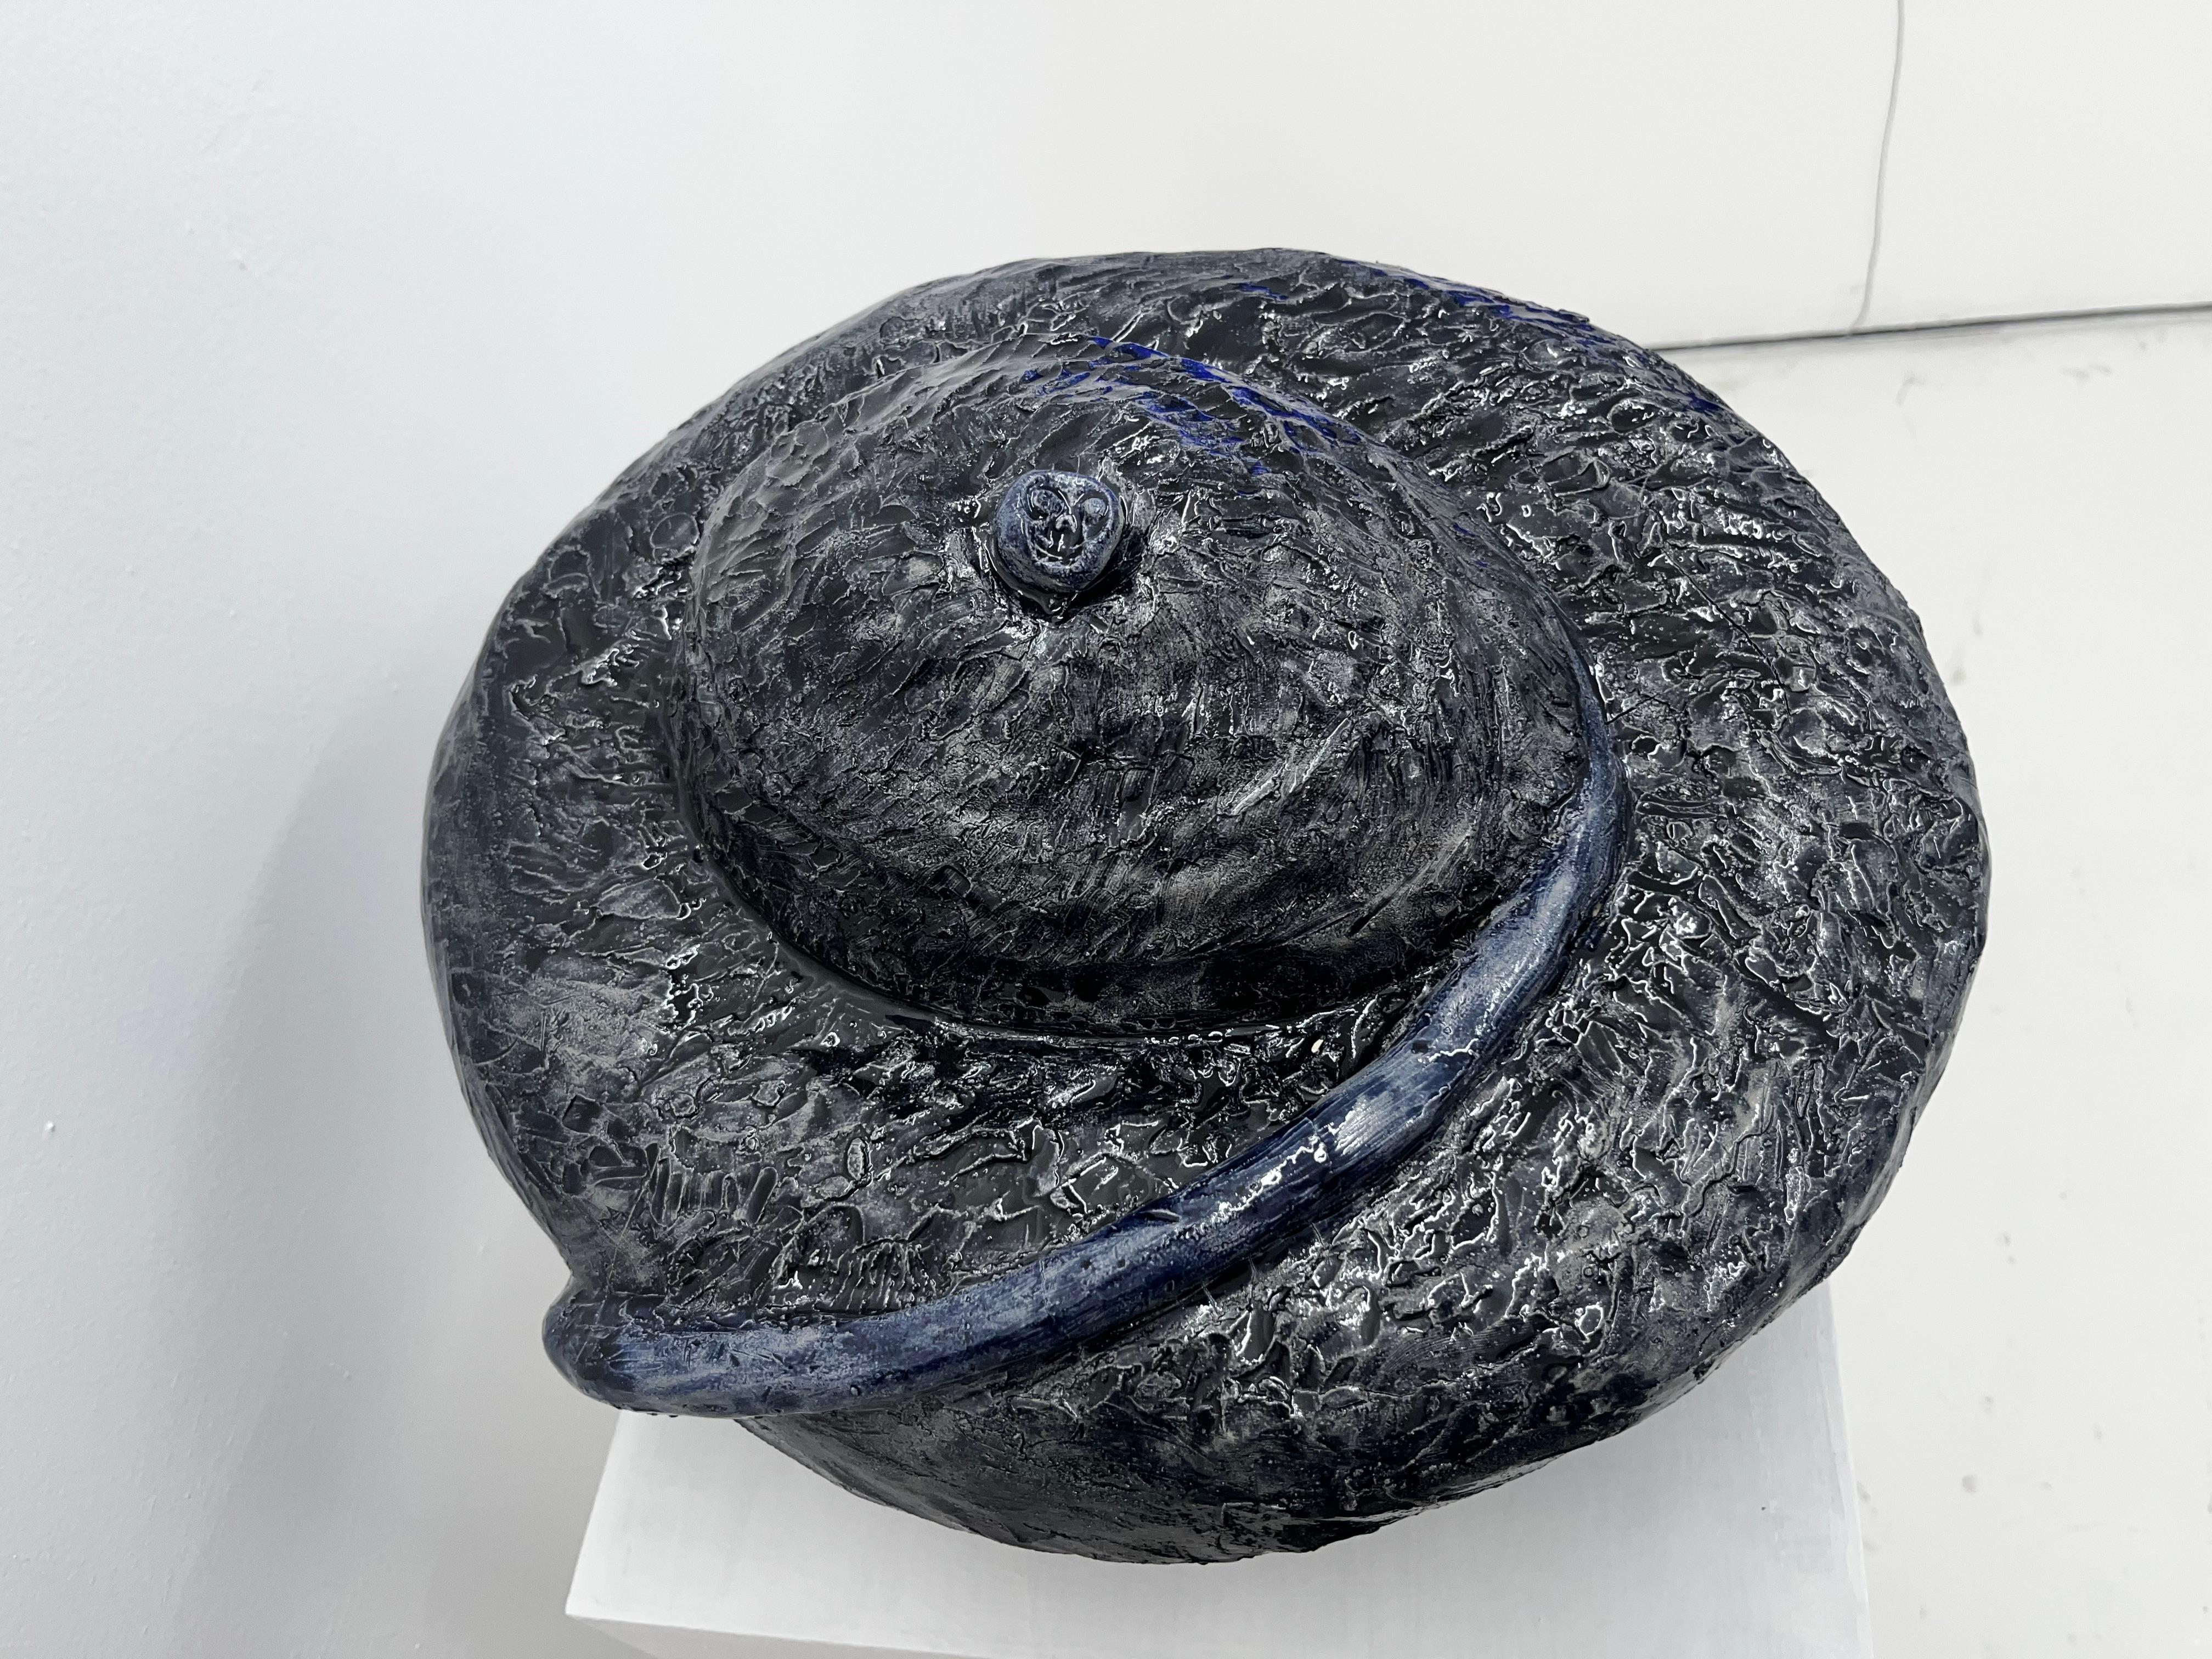 Untitled - organic sculpture, blue and black, high temperature ceramic - Sculpture by Nicolás Guzmán